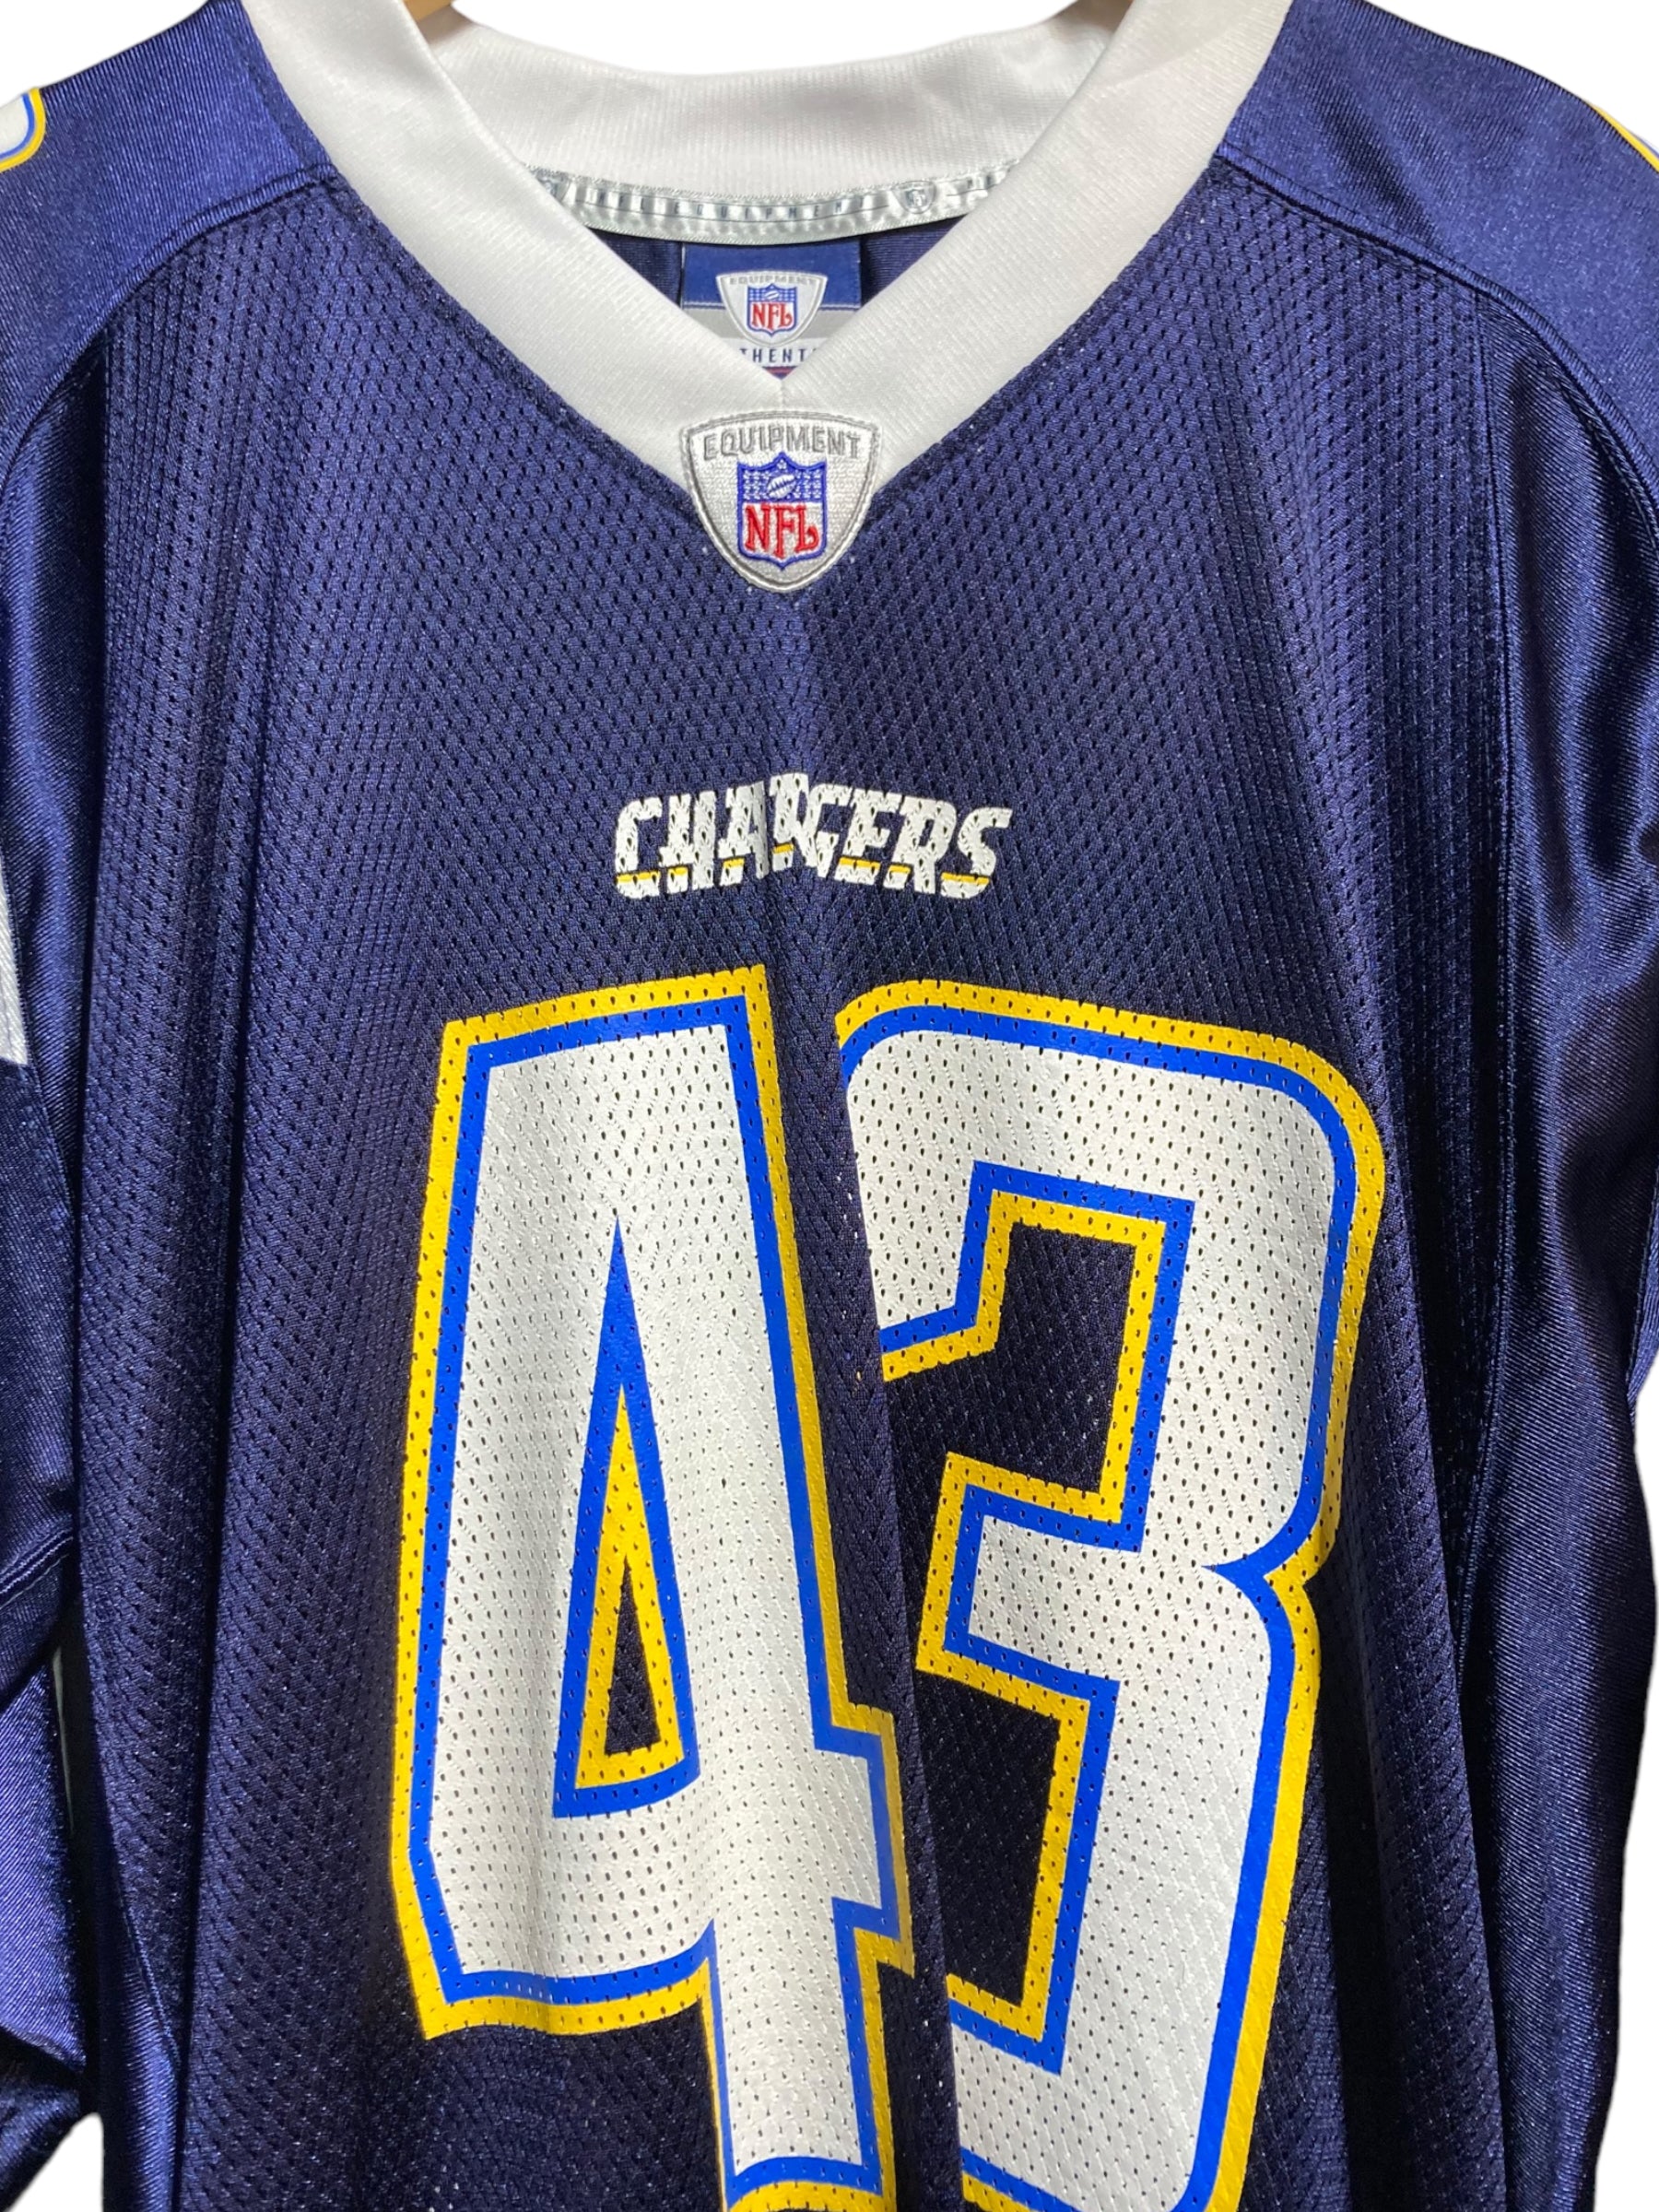 NFL chargers ロサンゼルス チャージャーズ Reebok リーボック ゲームシャツ ユニフォーム